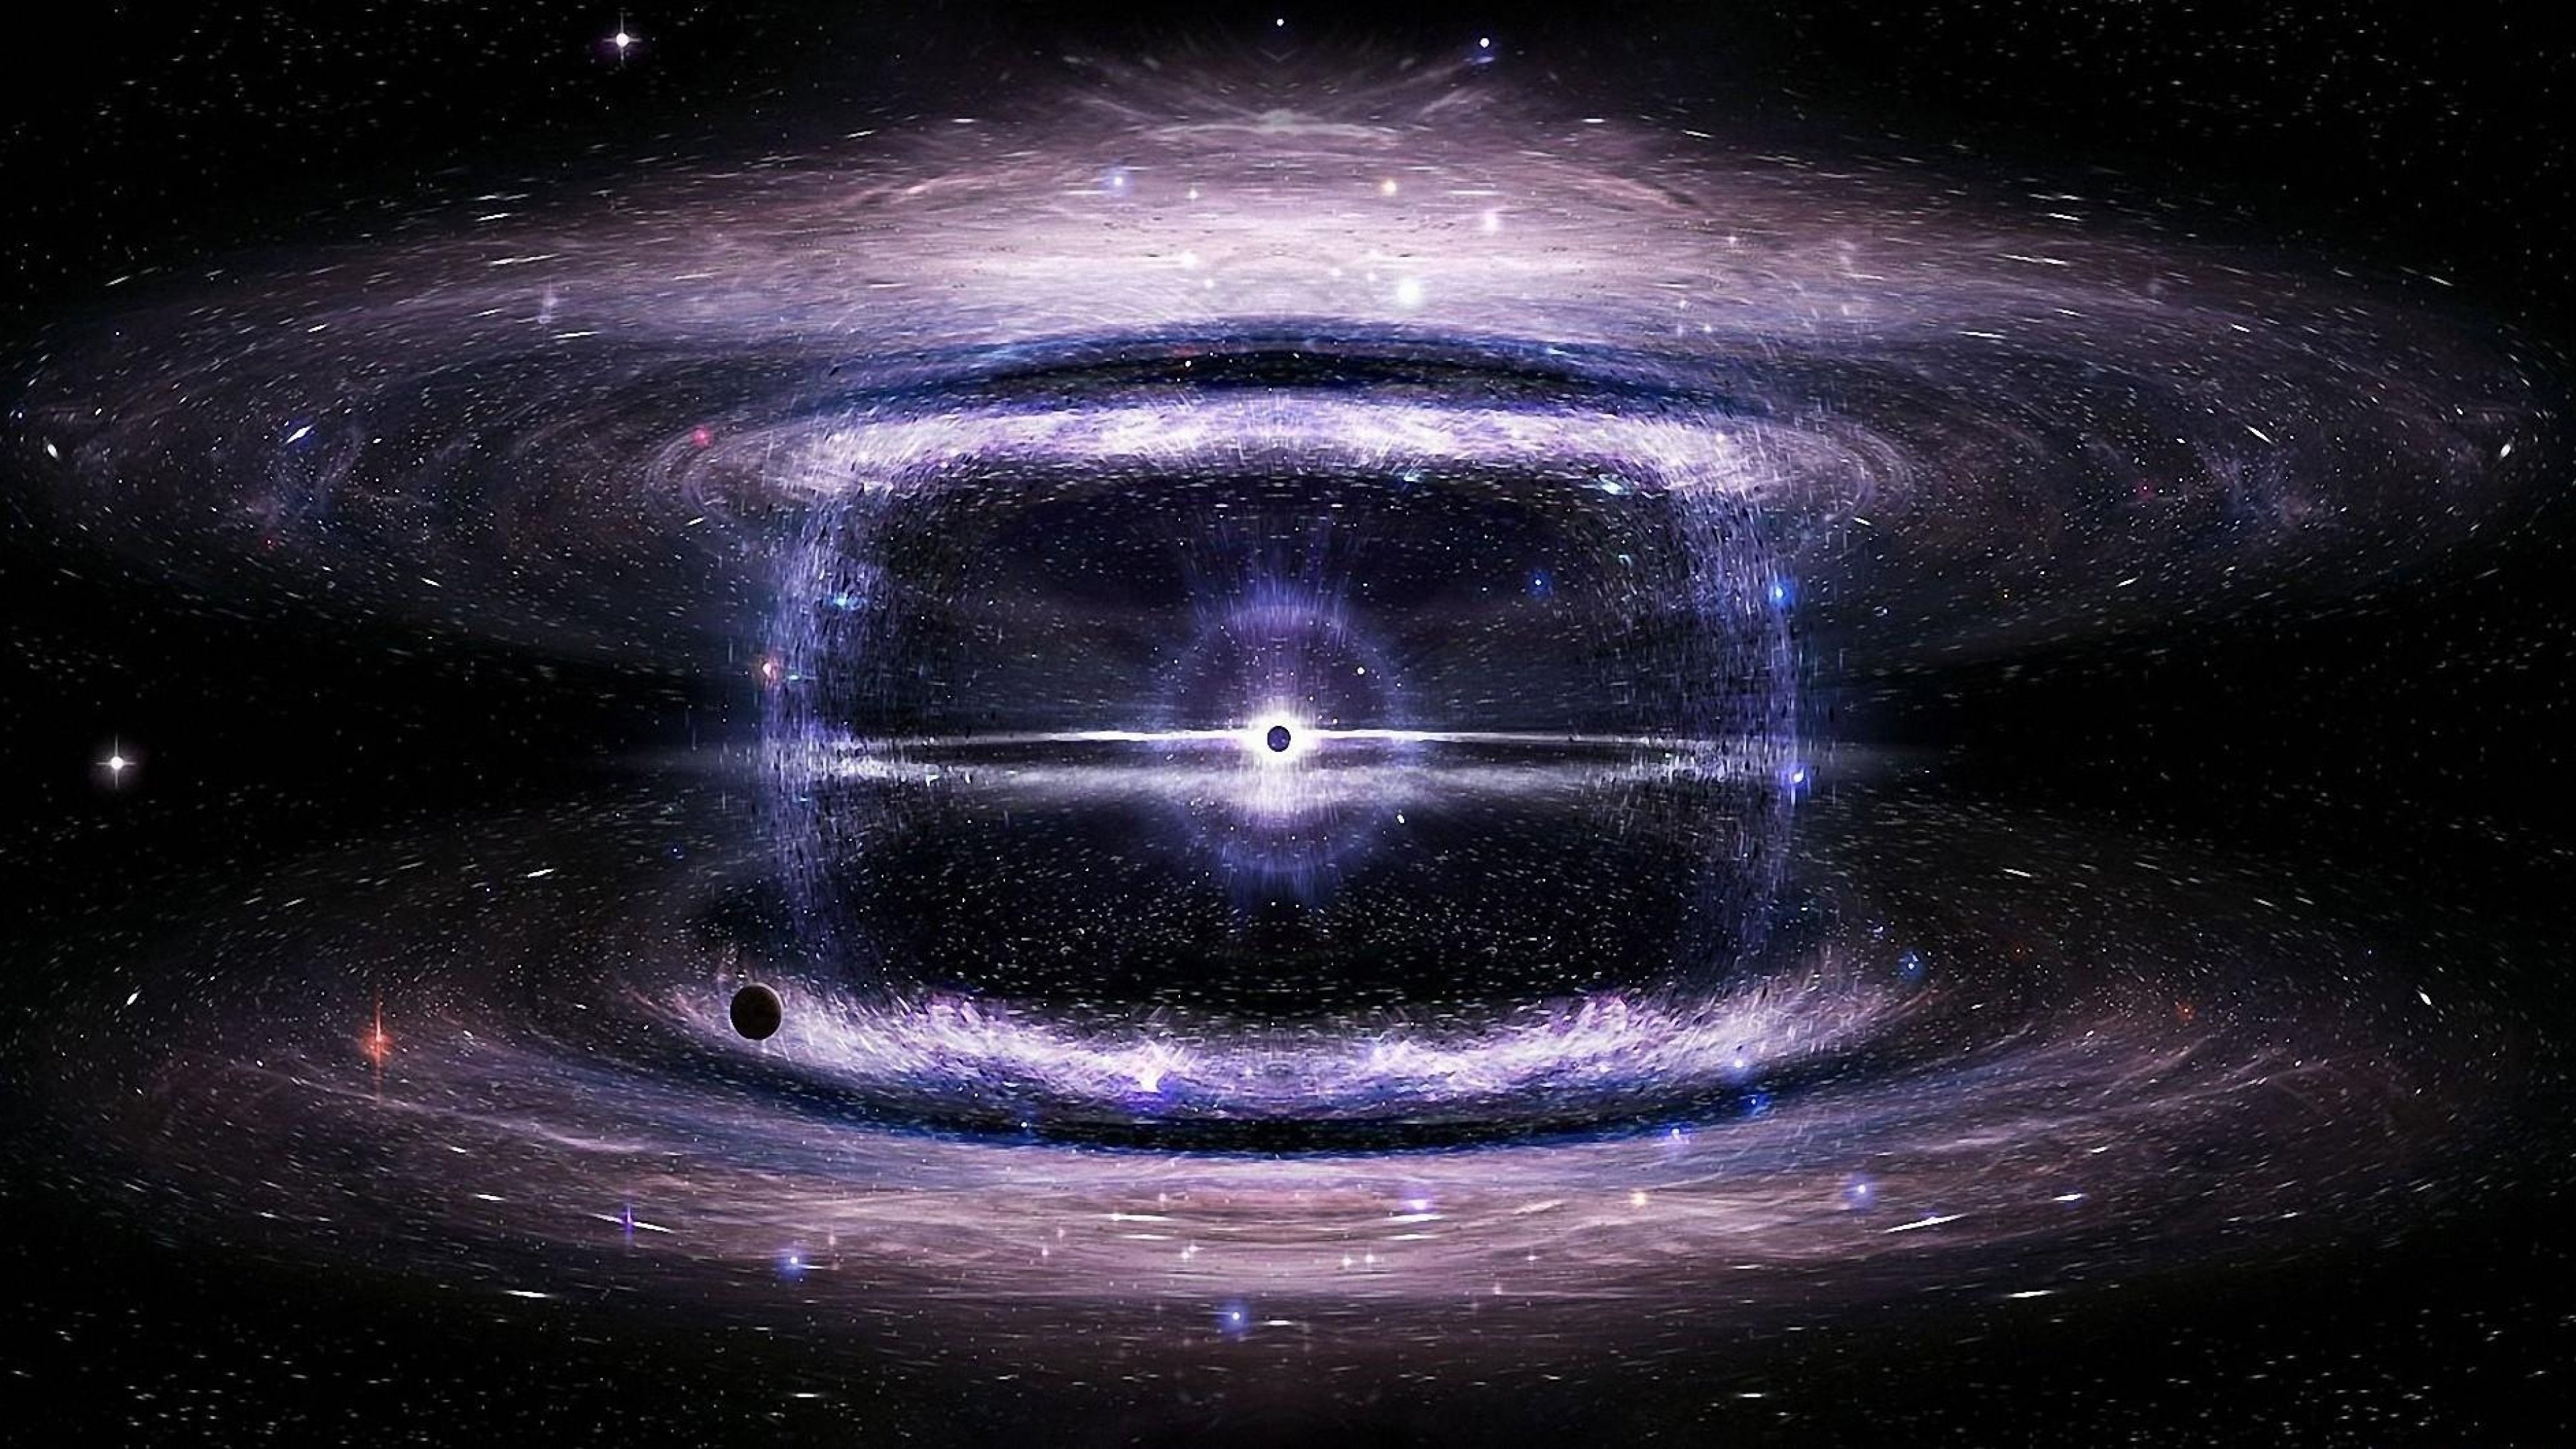  Black hole Space Stars Circles Universe Wallpaper Background 4K 3840x2160